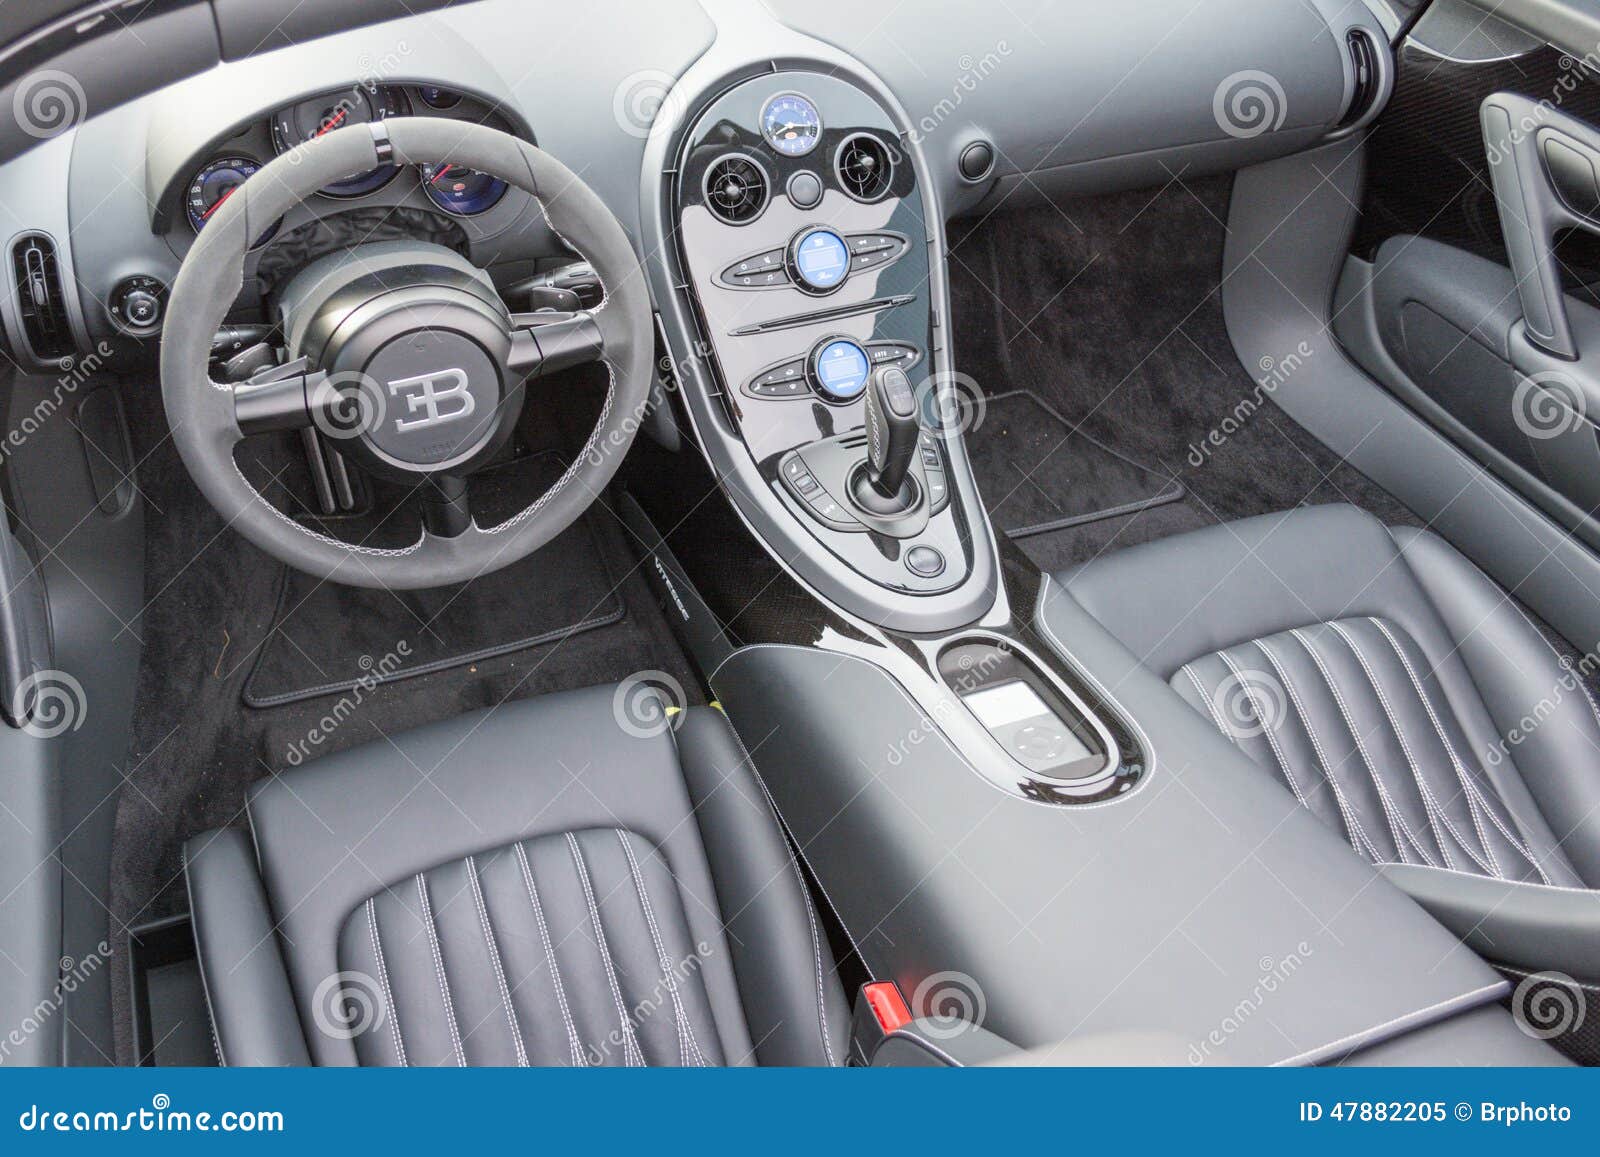 Bugatti Veyron Interior On Display Editorial Image Image